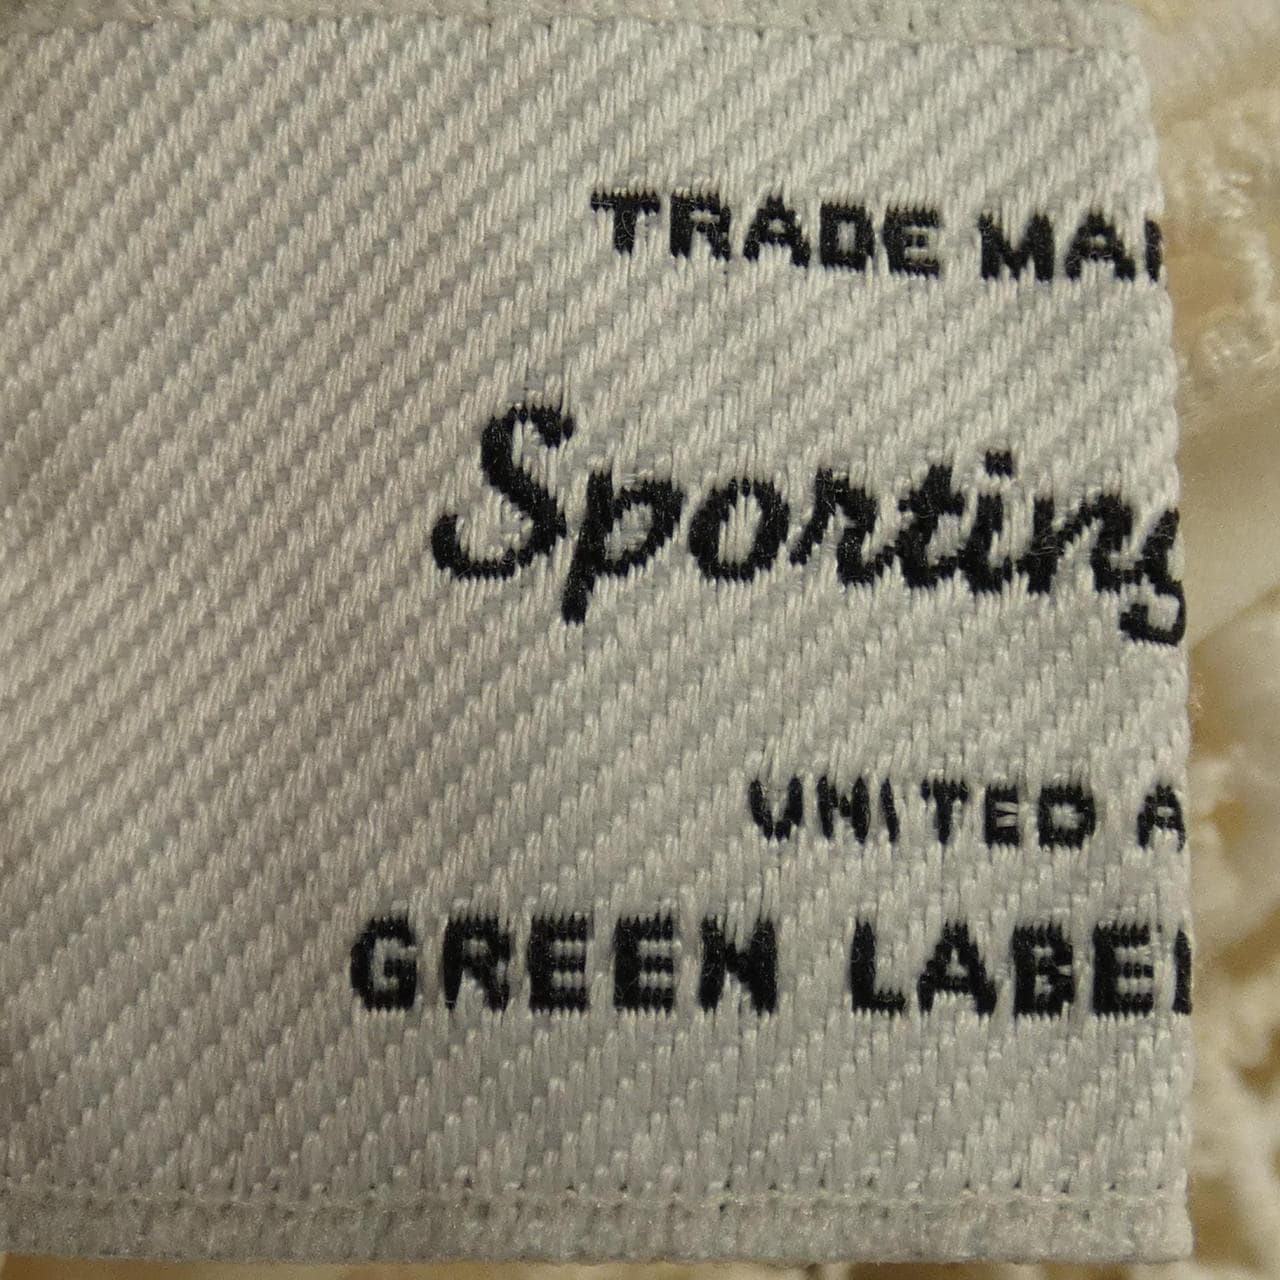 green label relaxing green label relaxing tops